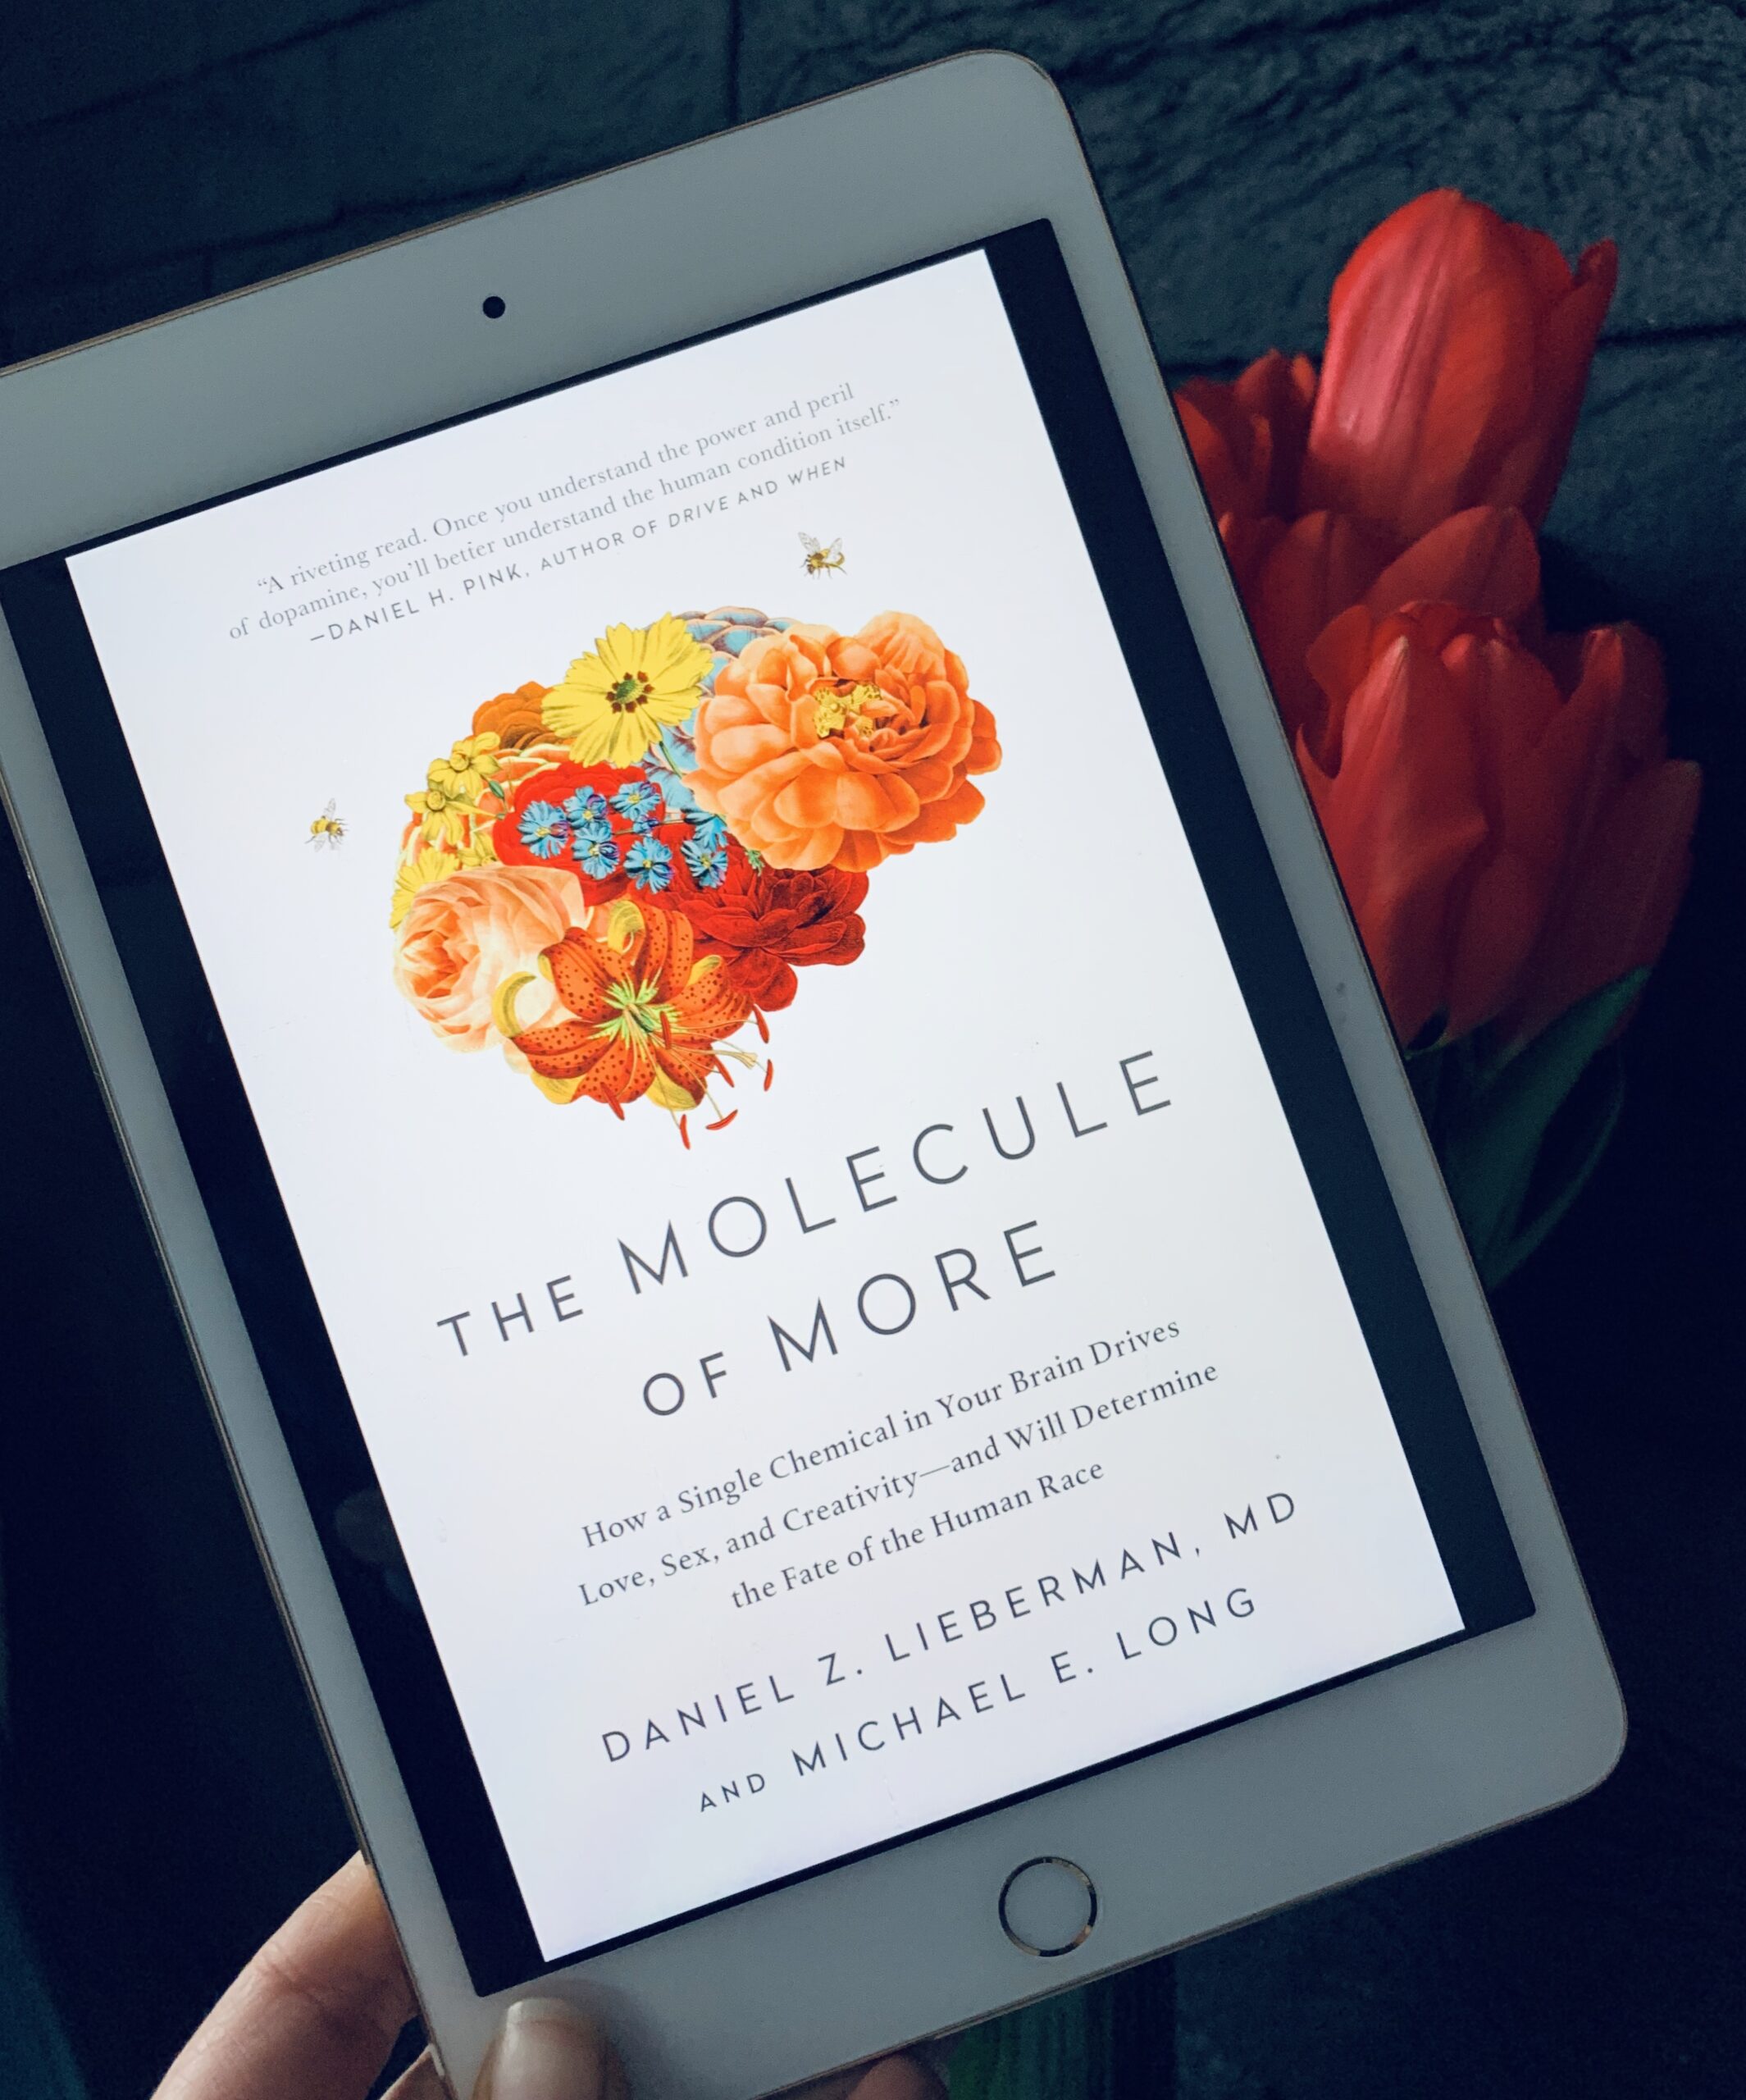 The Molecule of More. Daniel Z. Lieberman & Michael E. Long - Book